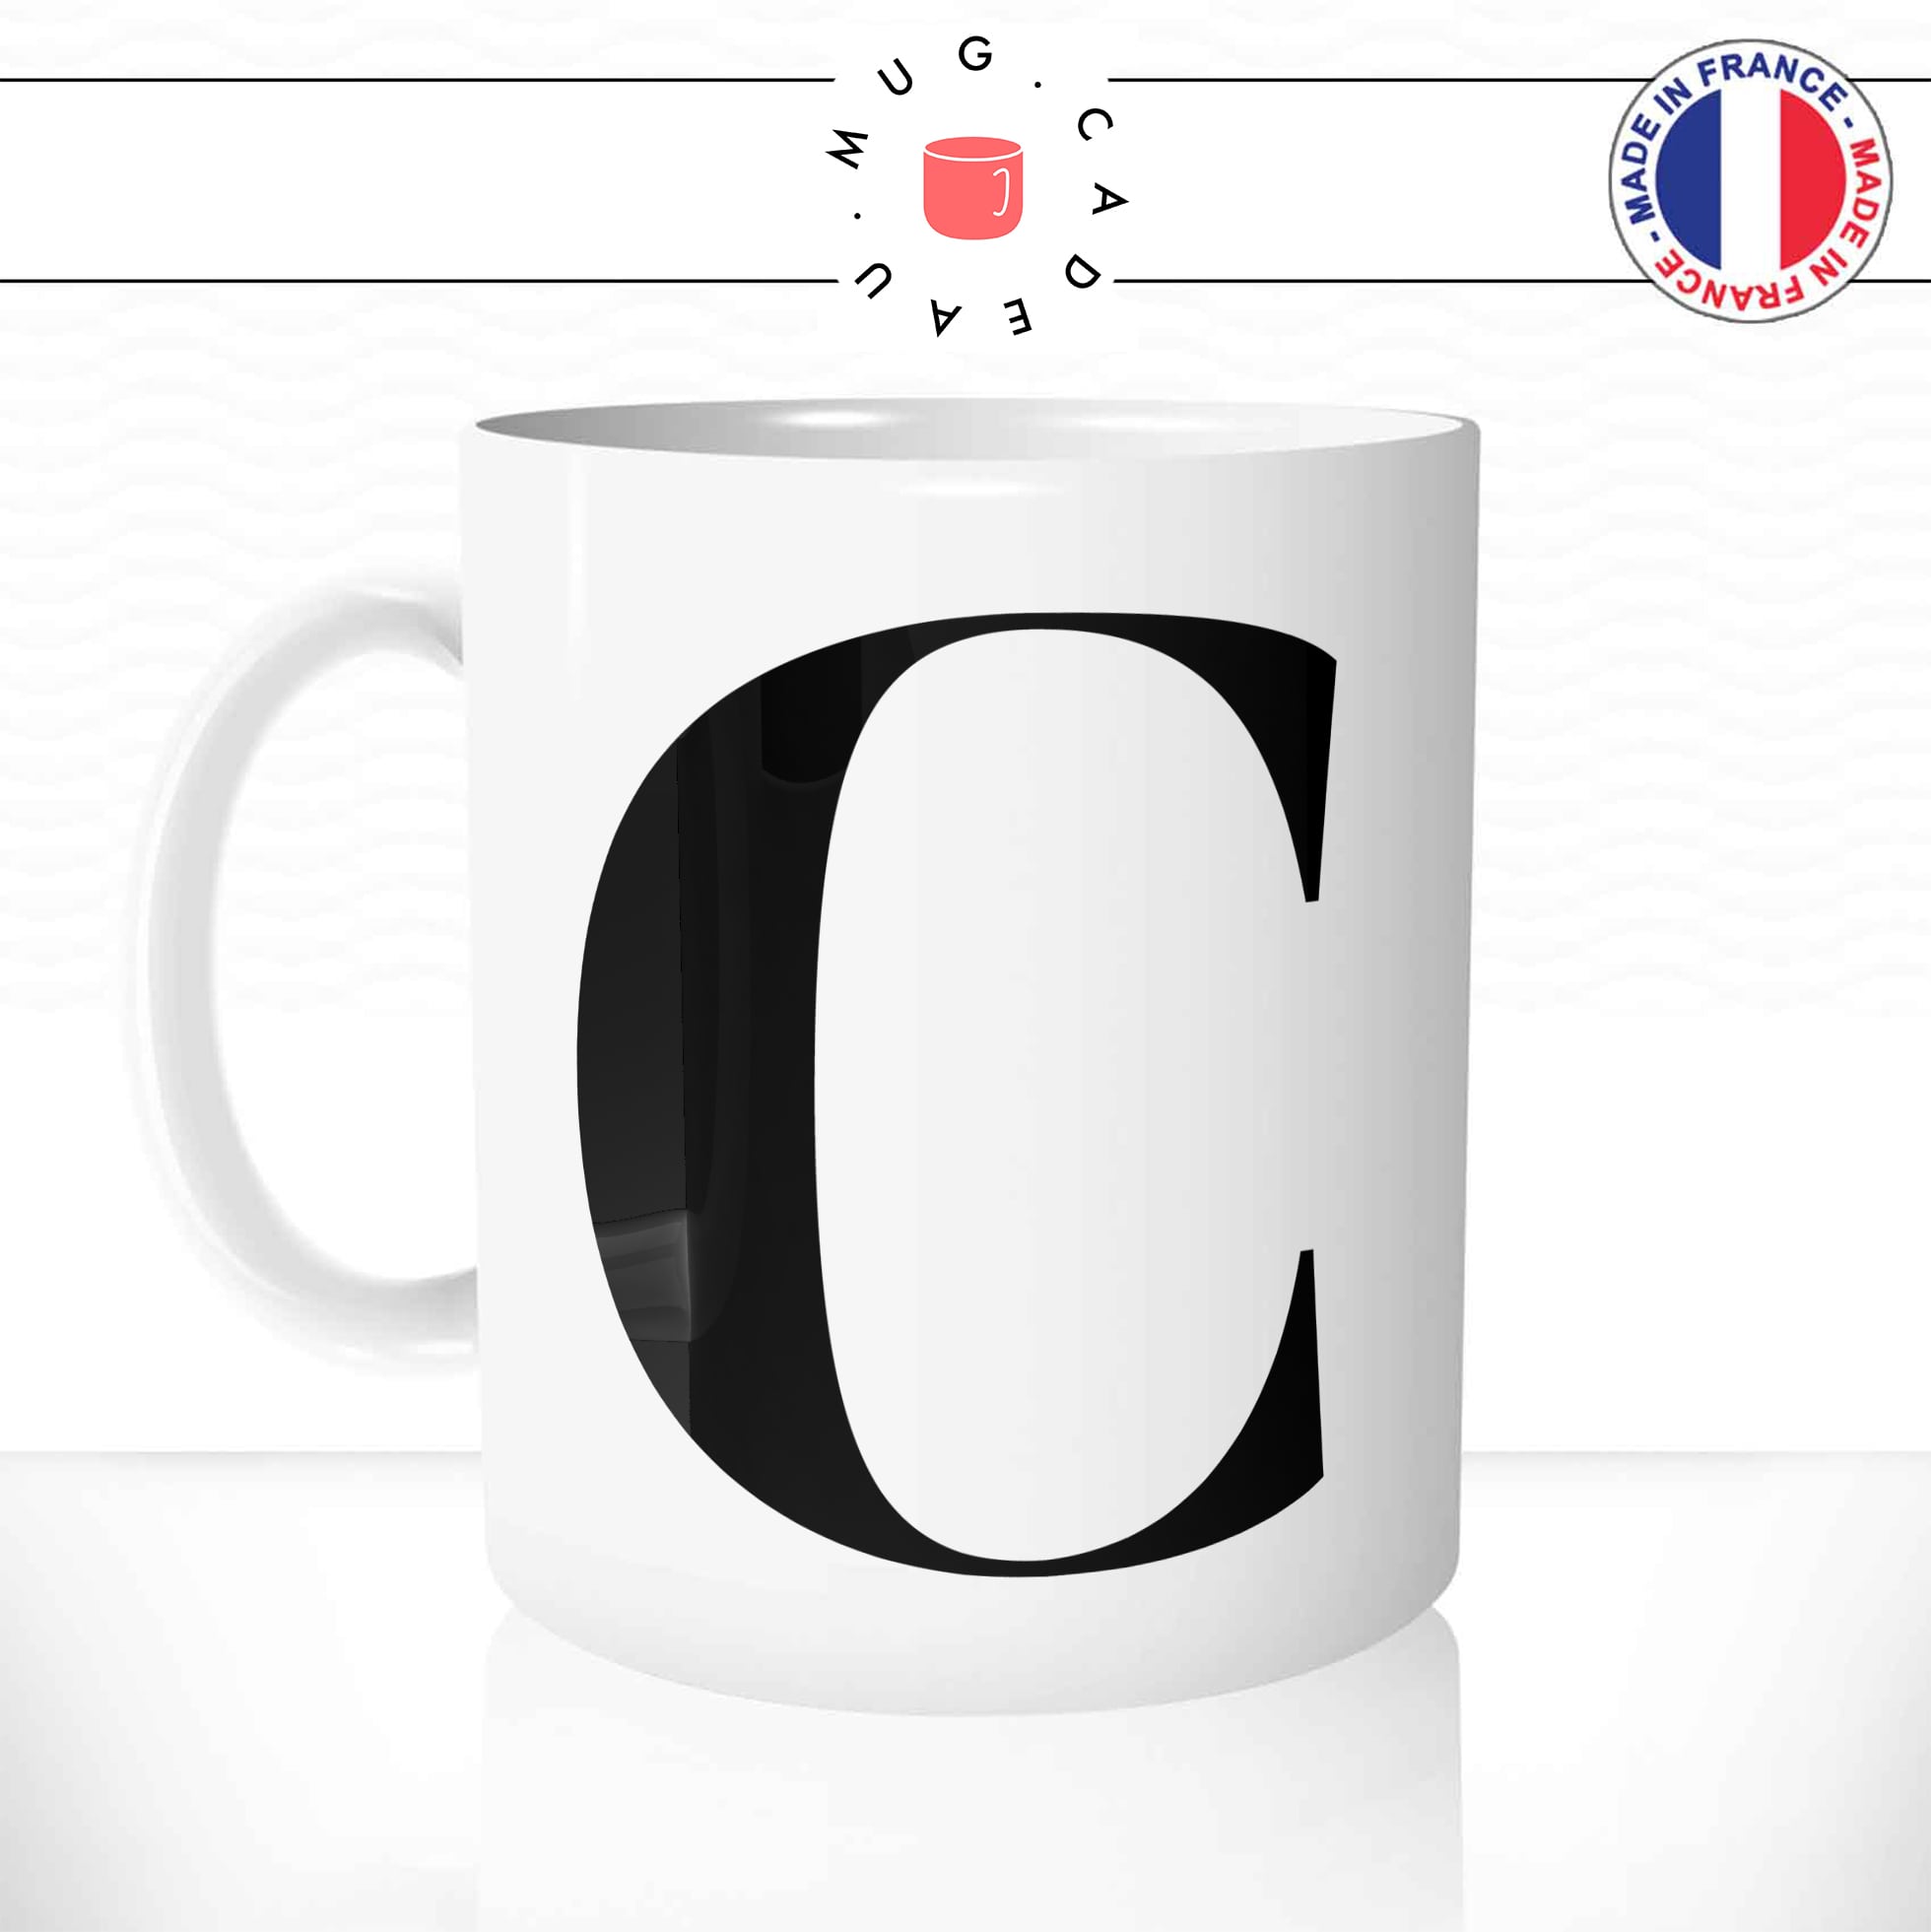 mug-tasse-C-initiale-alphabet-prenom-nom-calligraphie-majuscule-minuscule-original-café-thé-idée-cadeau-personnalisable-fun